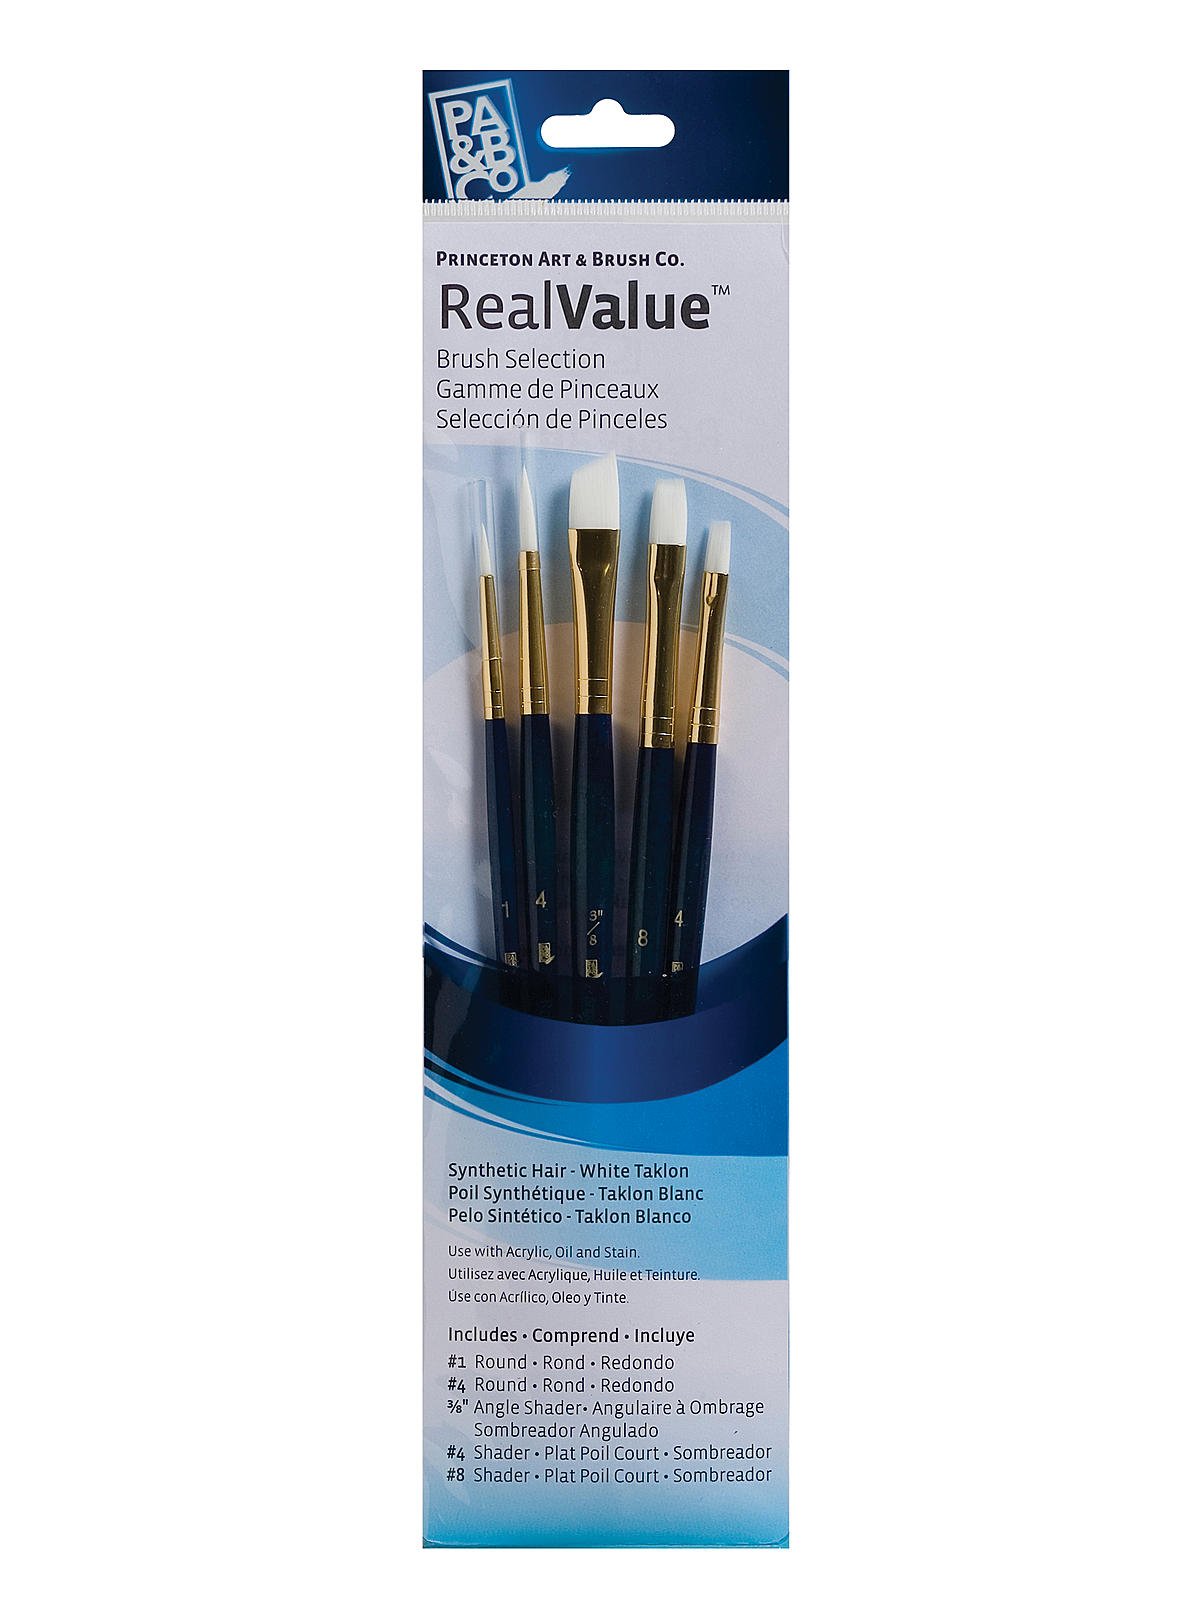 Princeton Real Value Series Blue Handled Brush Sets